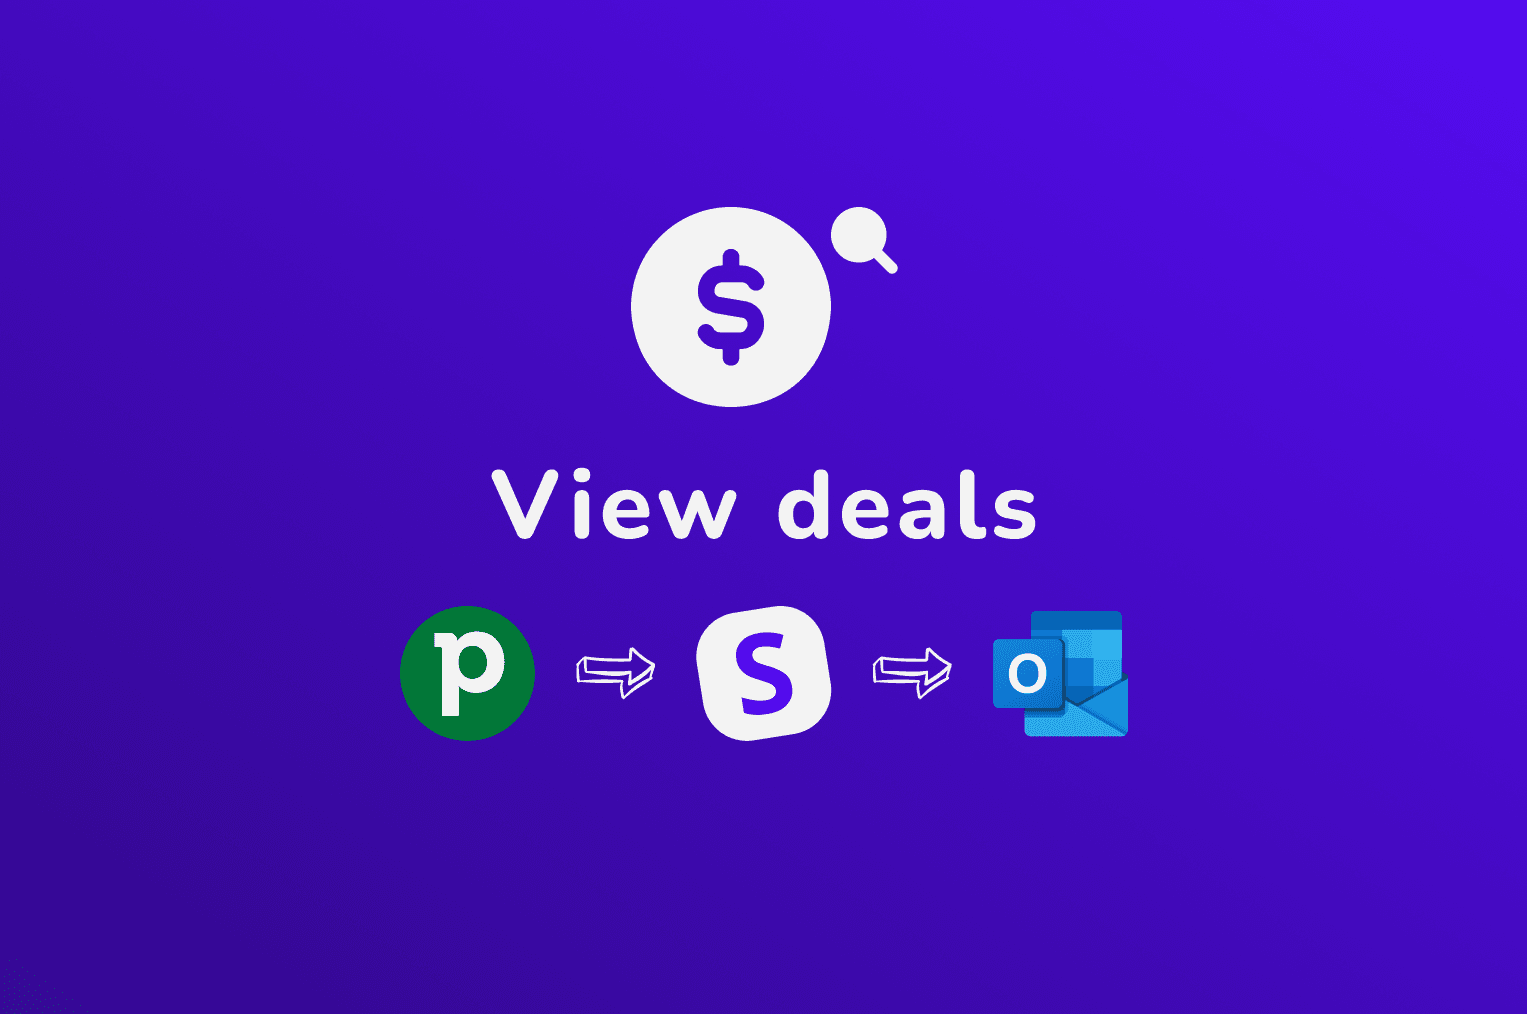 View deals